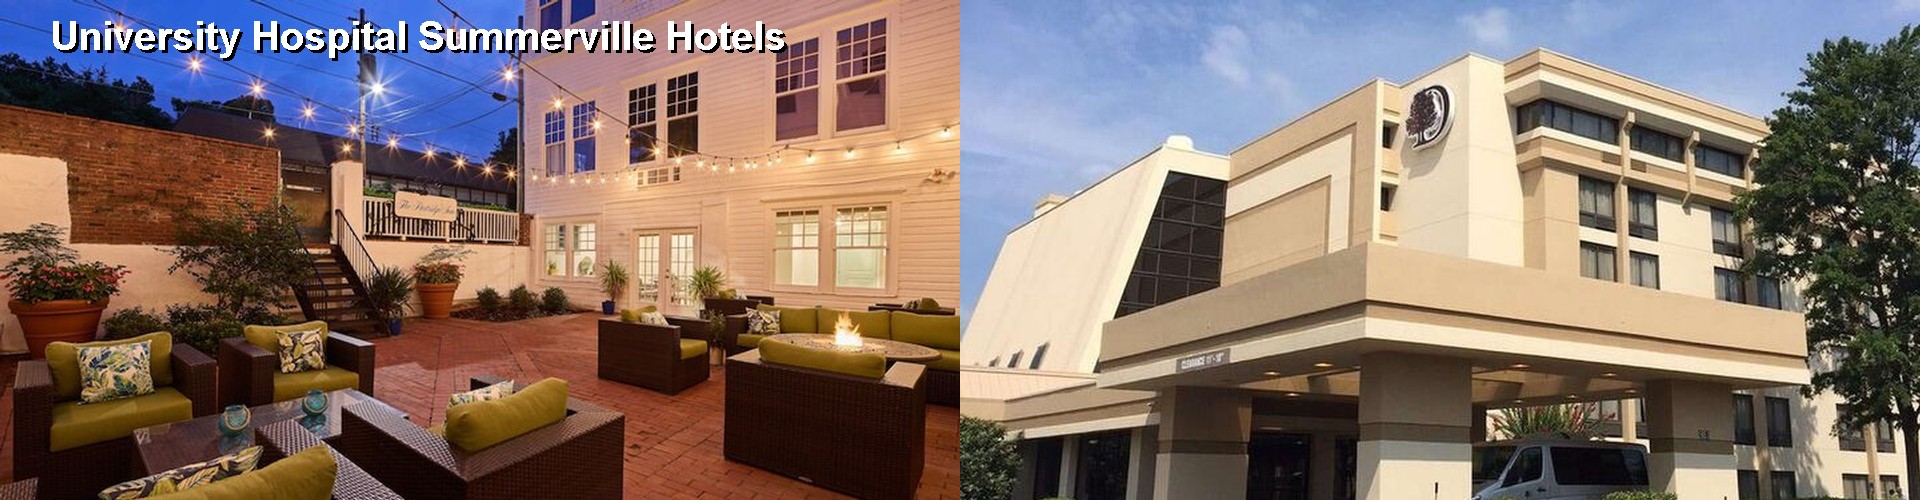 4 Best Hotels near University Hospital Summerville